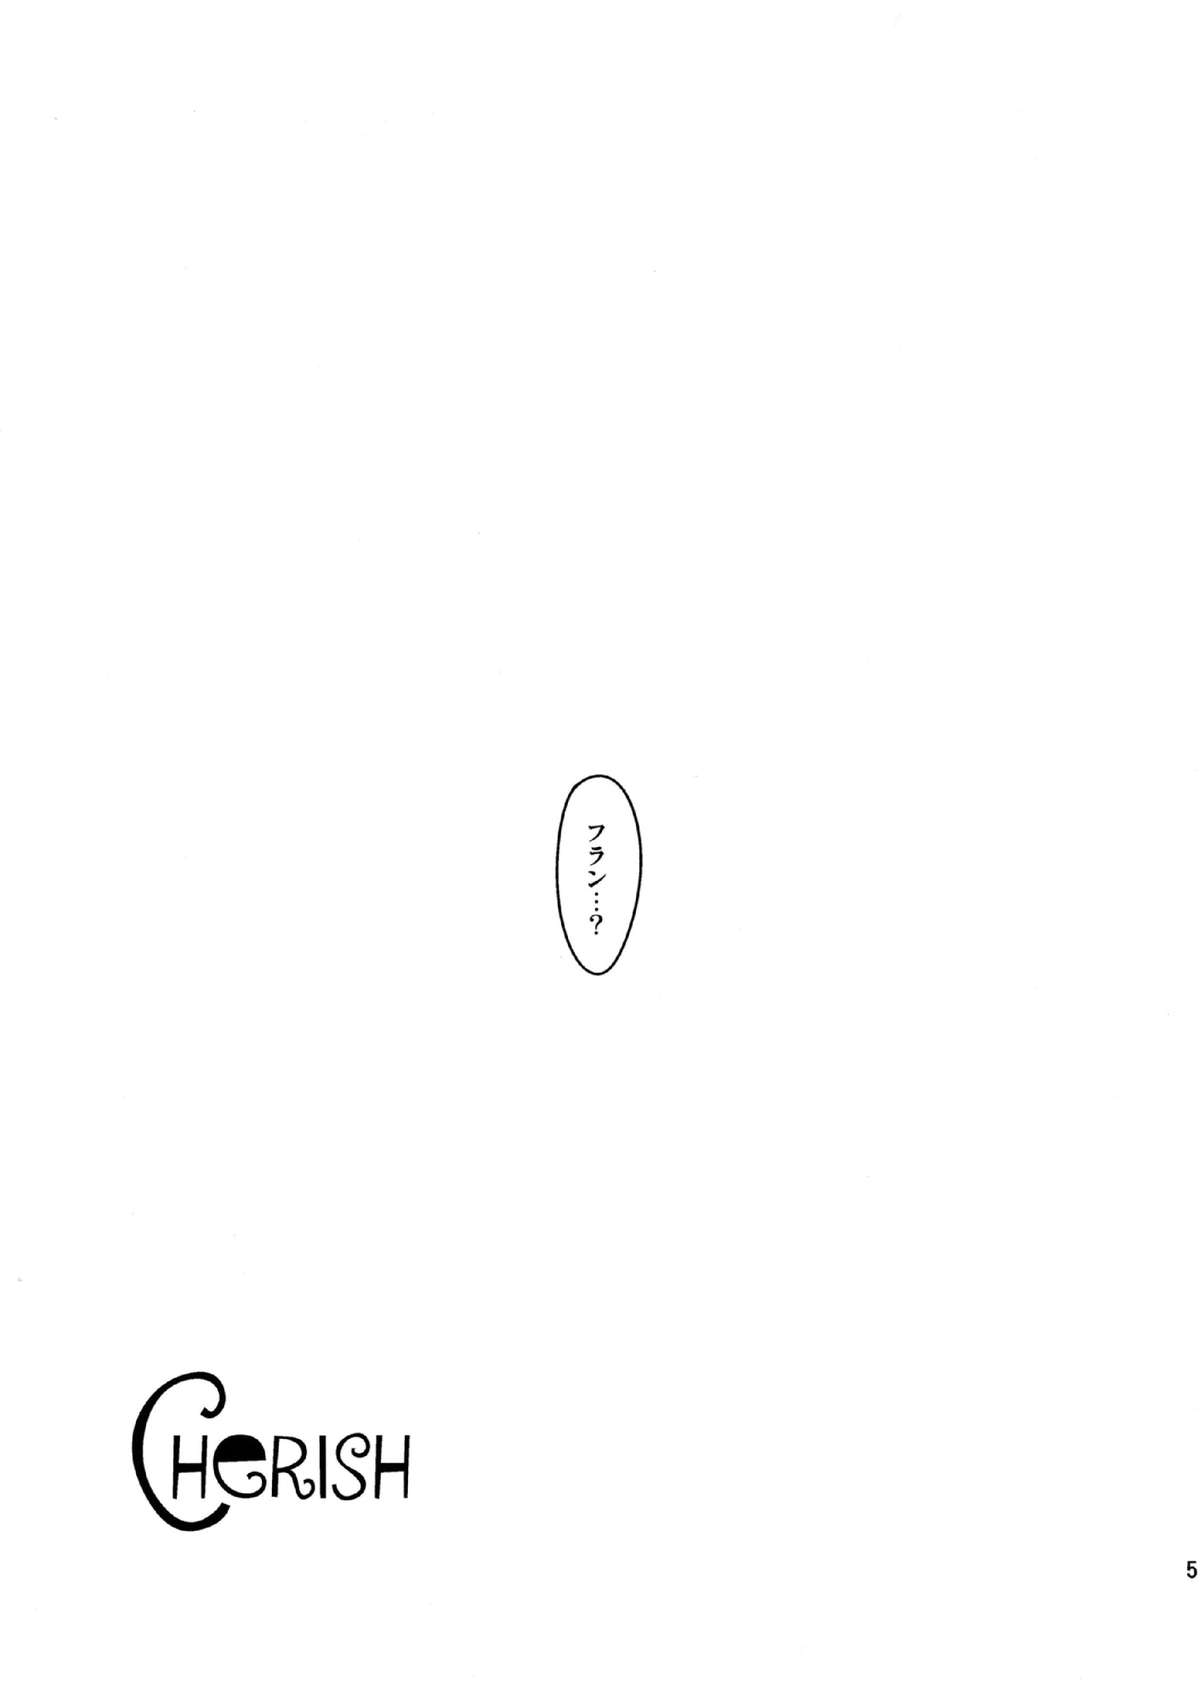 (C80) [*Cherish* (西村にけ)] les miserables (東方Project)